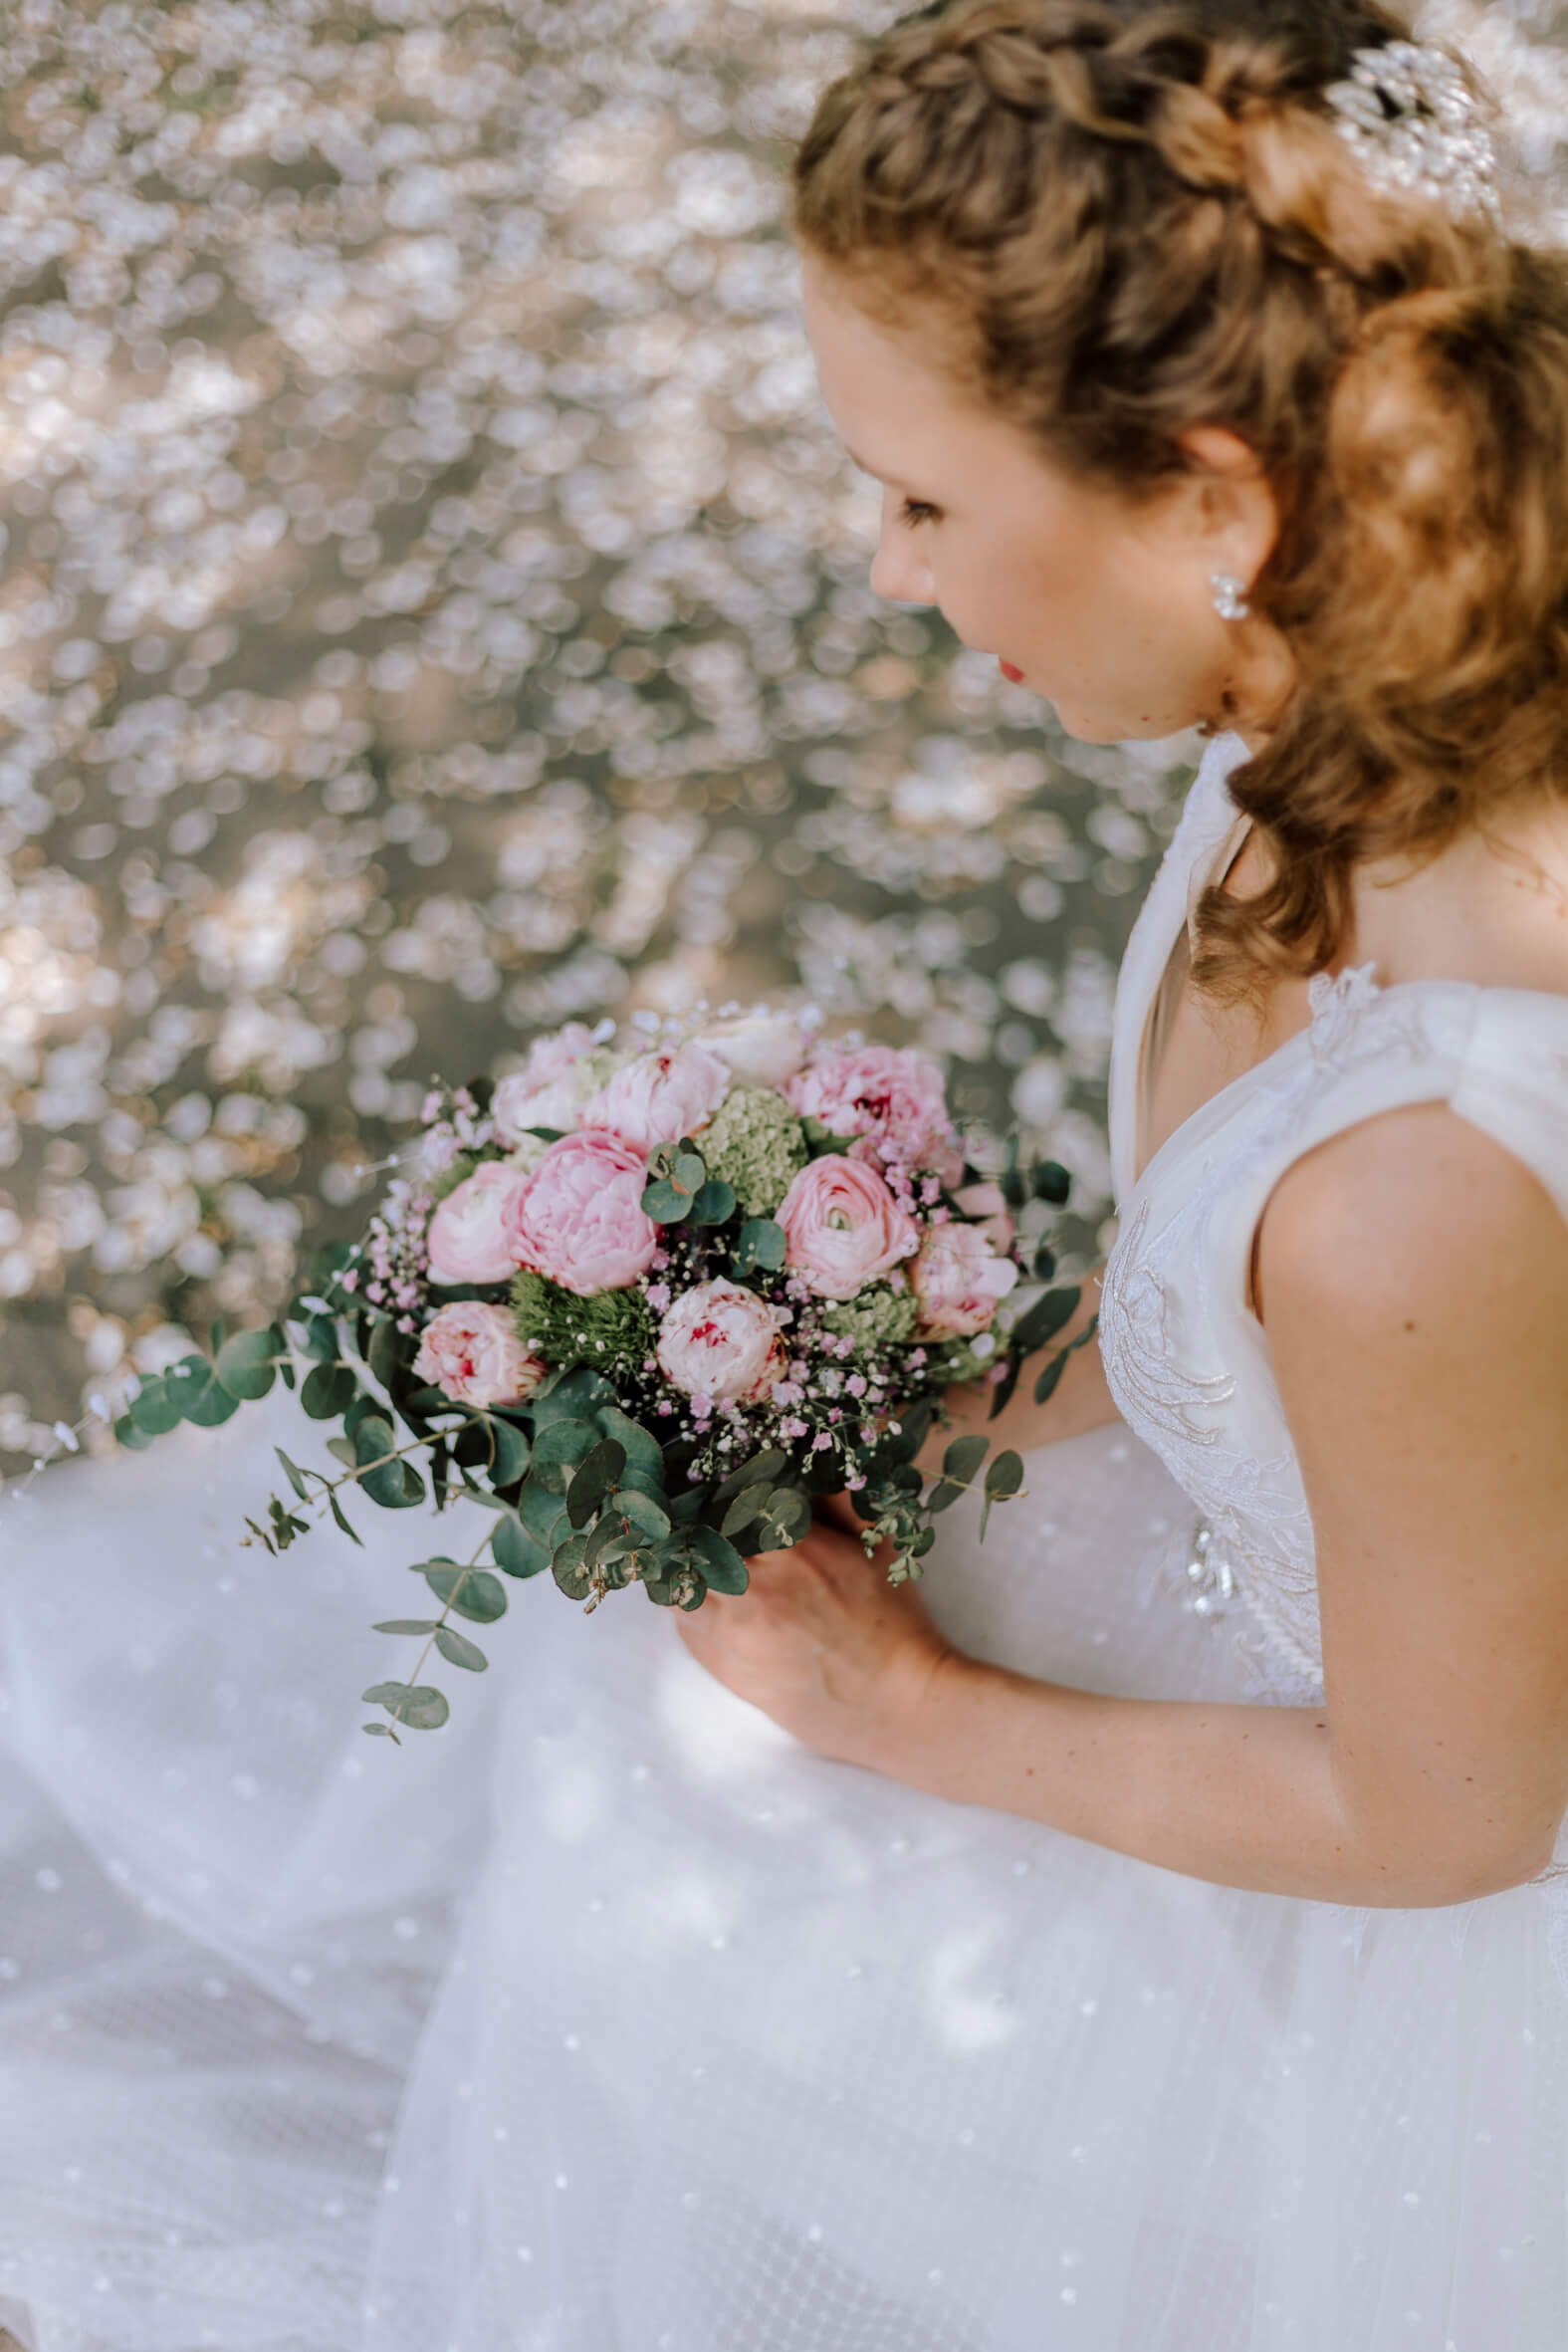 Wedding-Update-best-of-my-wedding-gown-from-inmaculada-garcia-shooting-kationette-fashionblogger-nrw-wedding-2018